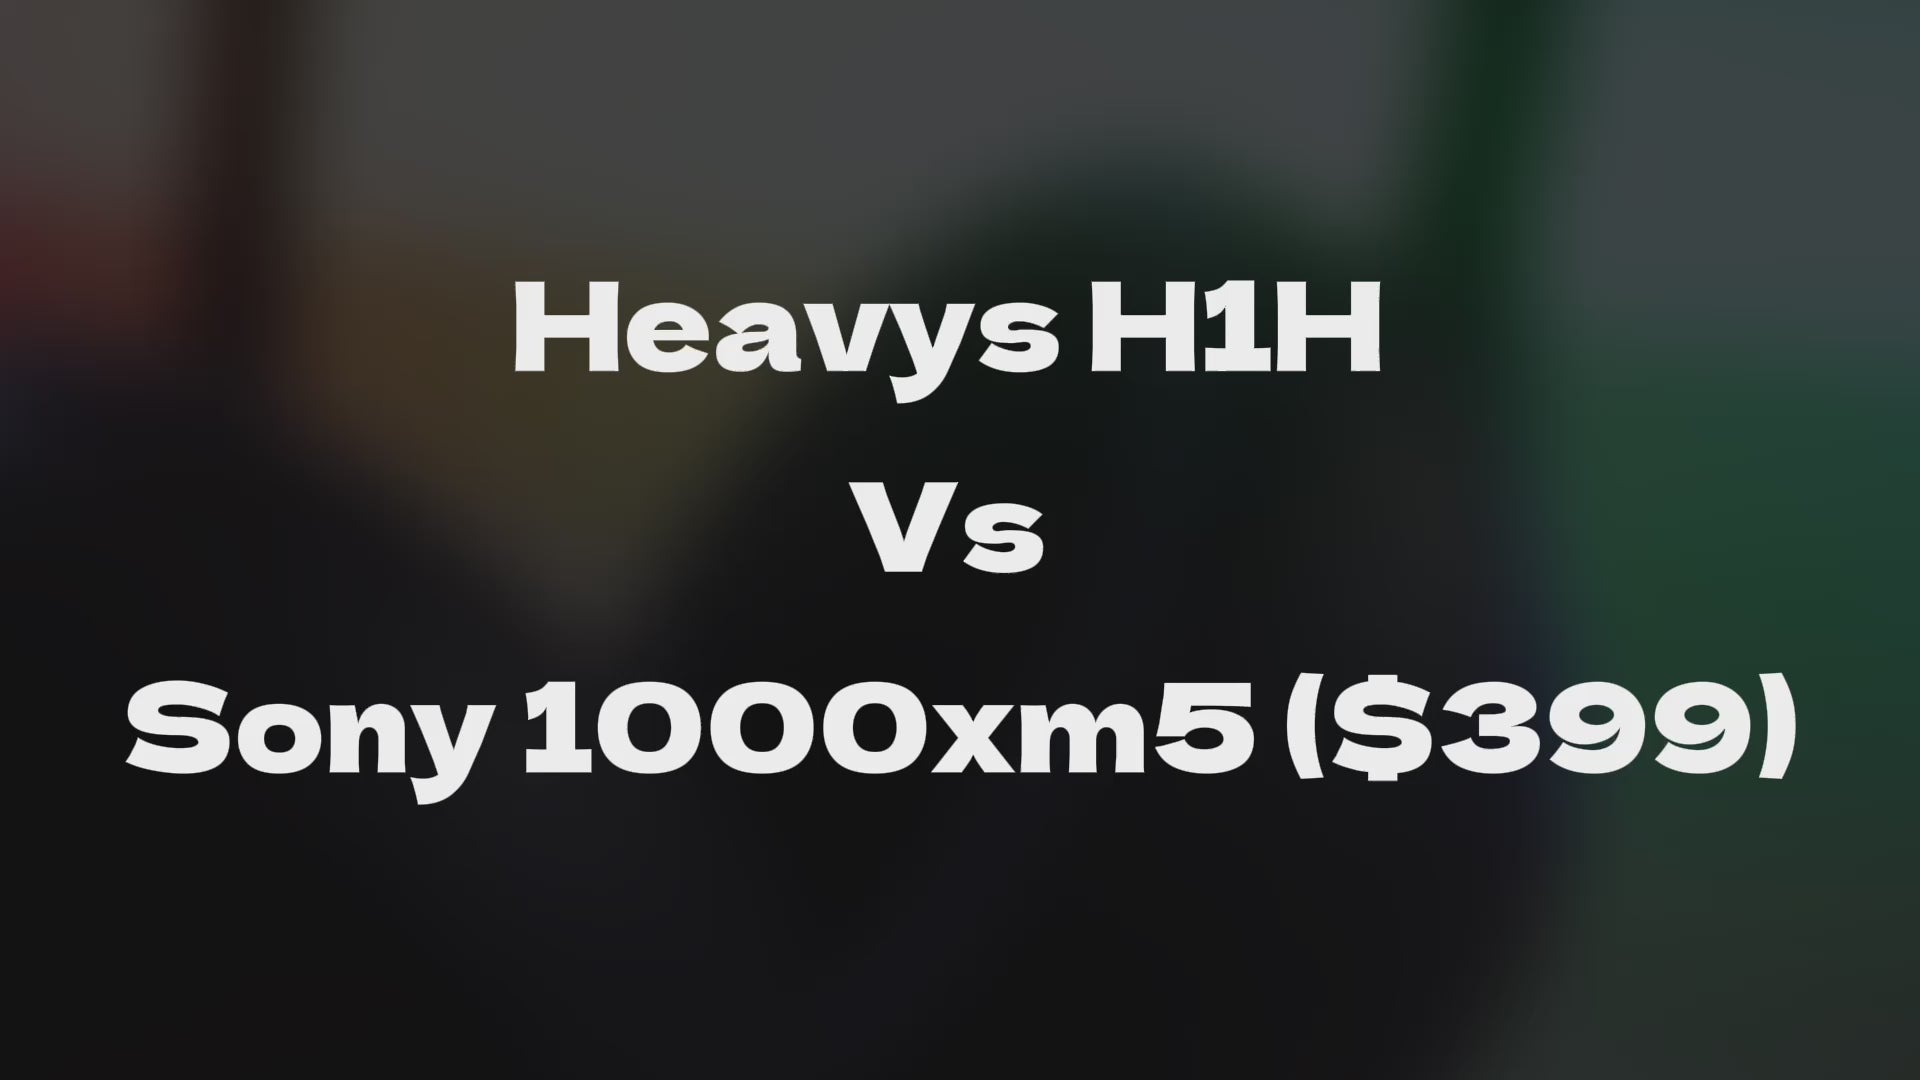 Load video: heavys H1H vs Sony 1000xm5